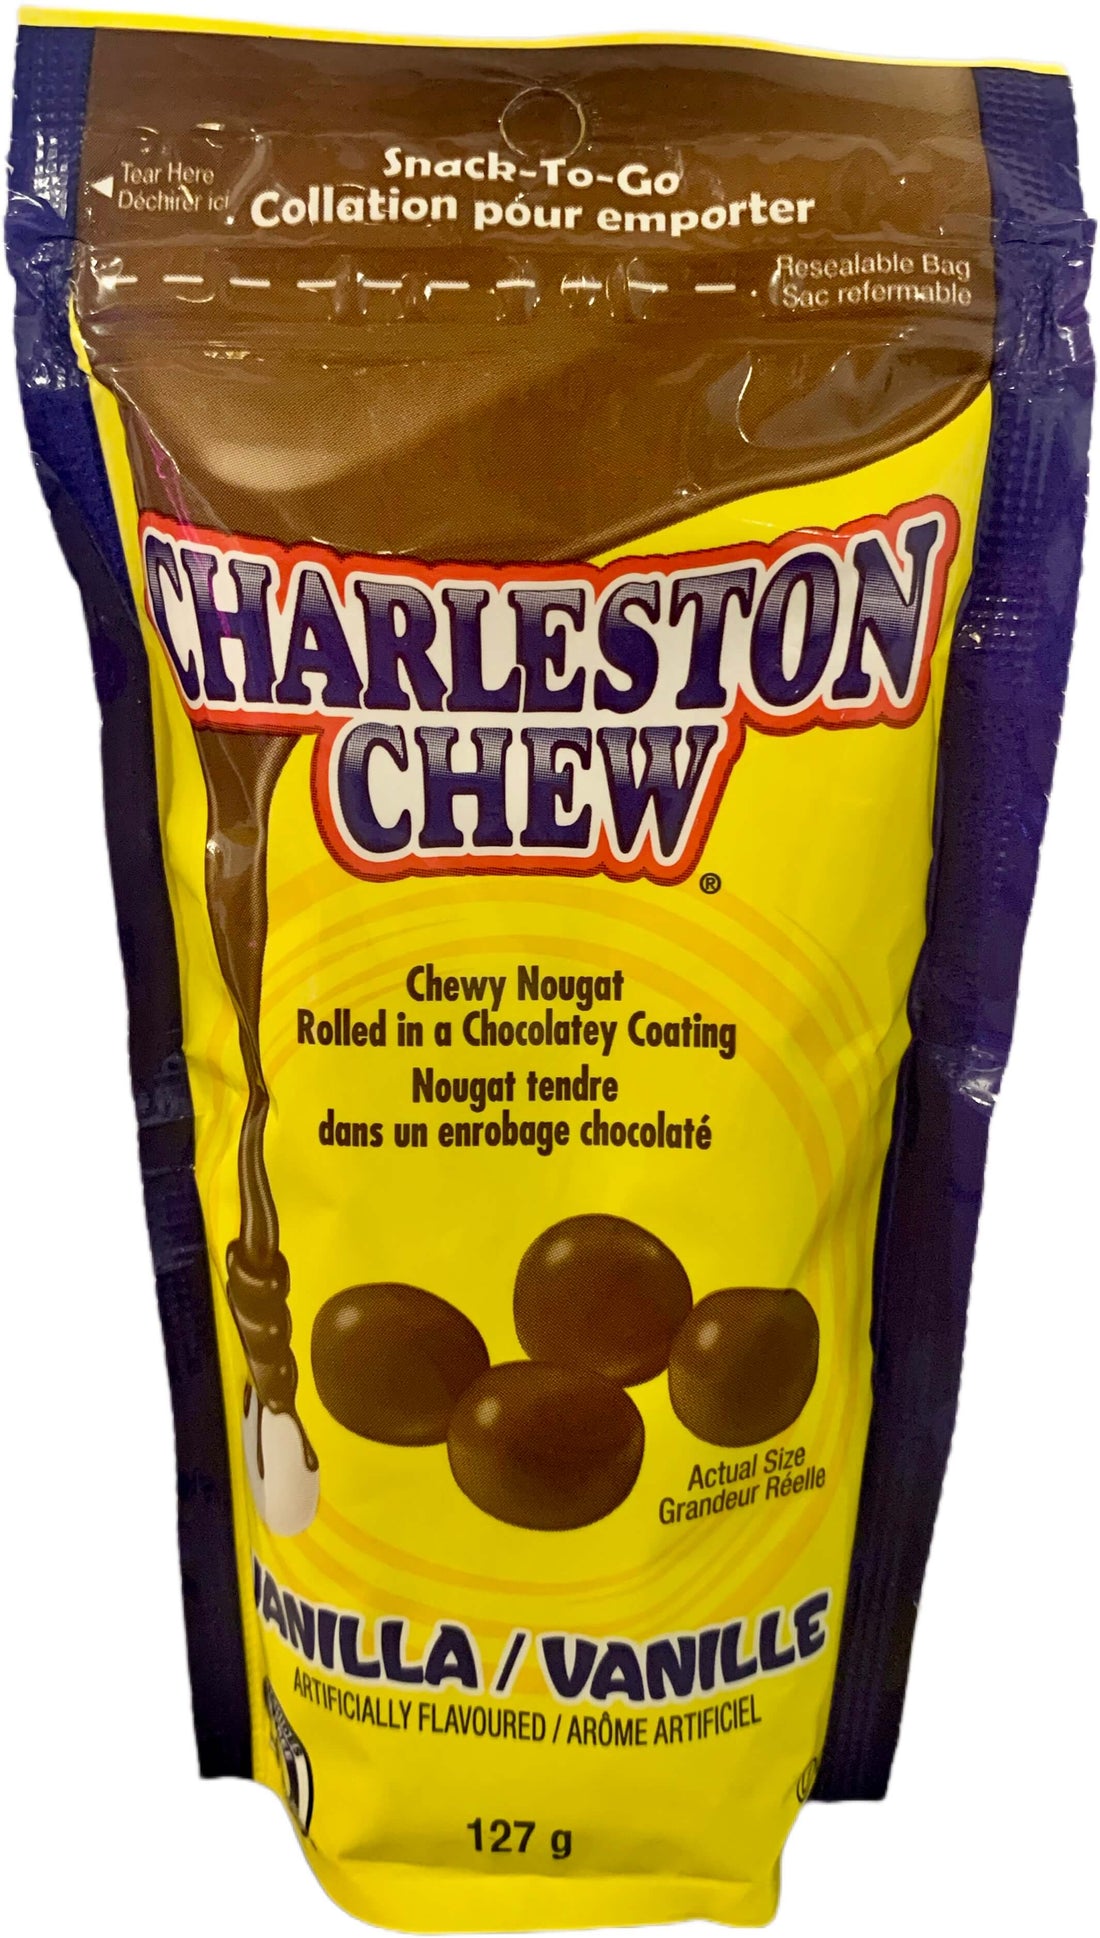 Charleston Chew vanille en bouchées